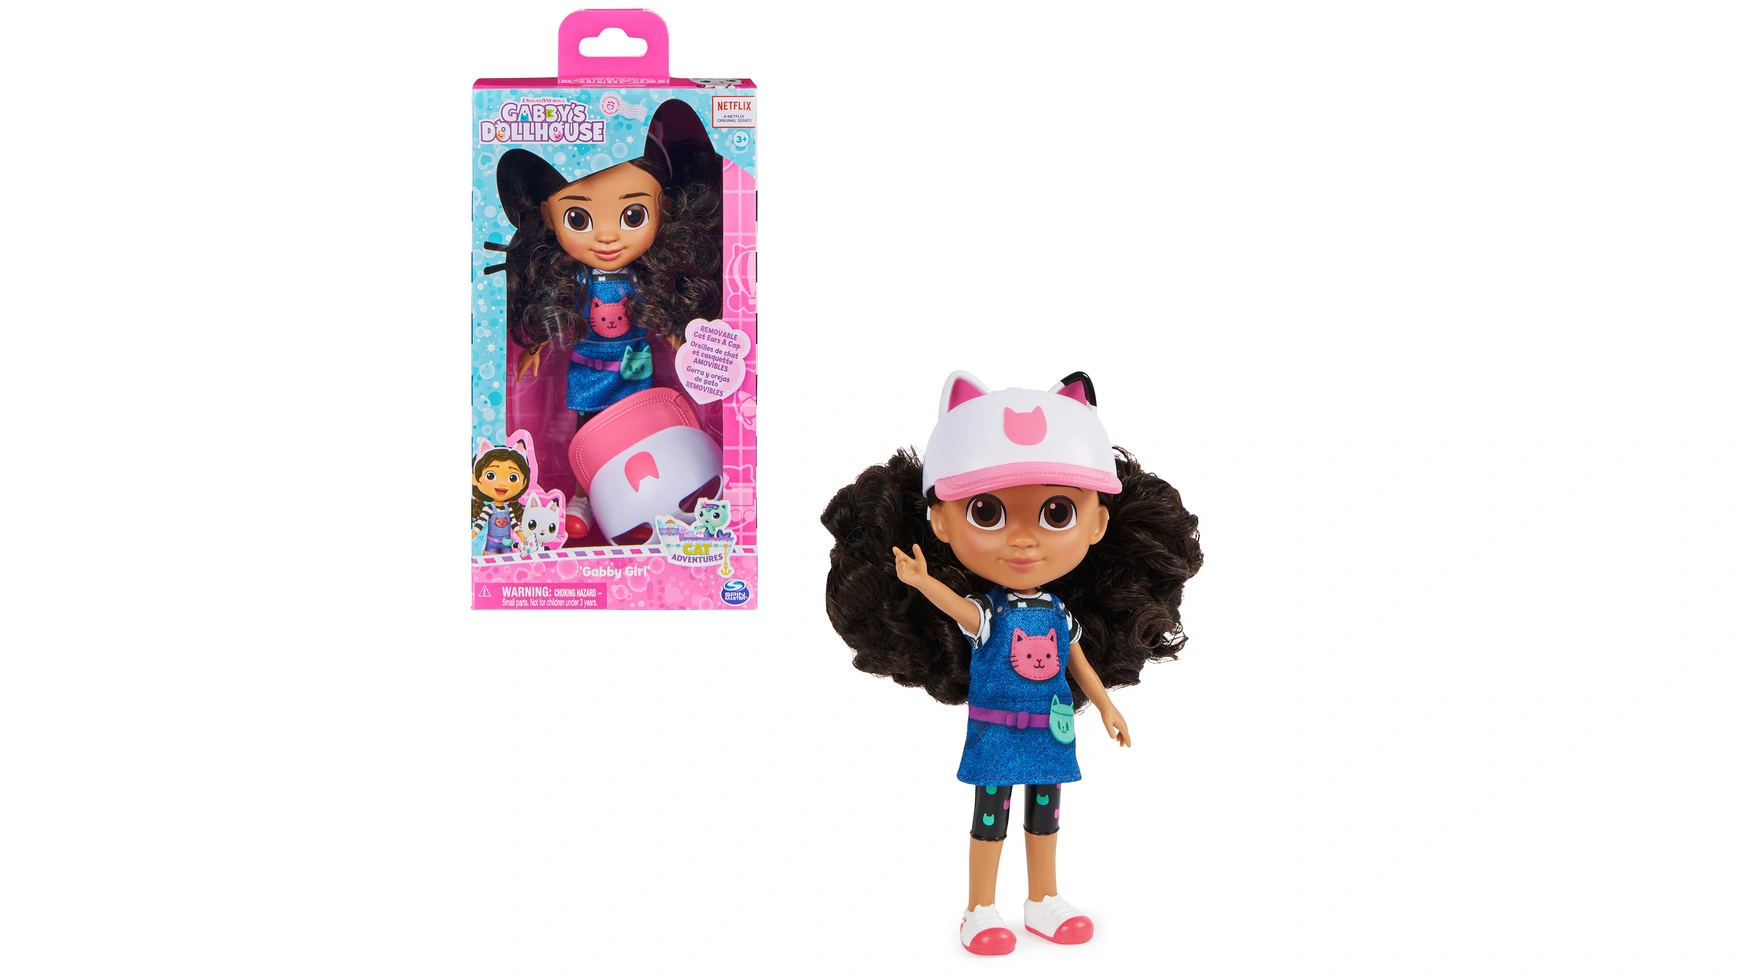 Gabbys Dollhouse Праздничная кукла Gabby Girl высотой 20 см набор для творчества spin master cool maker большой гоу глэм 2 0 6062239